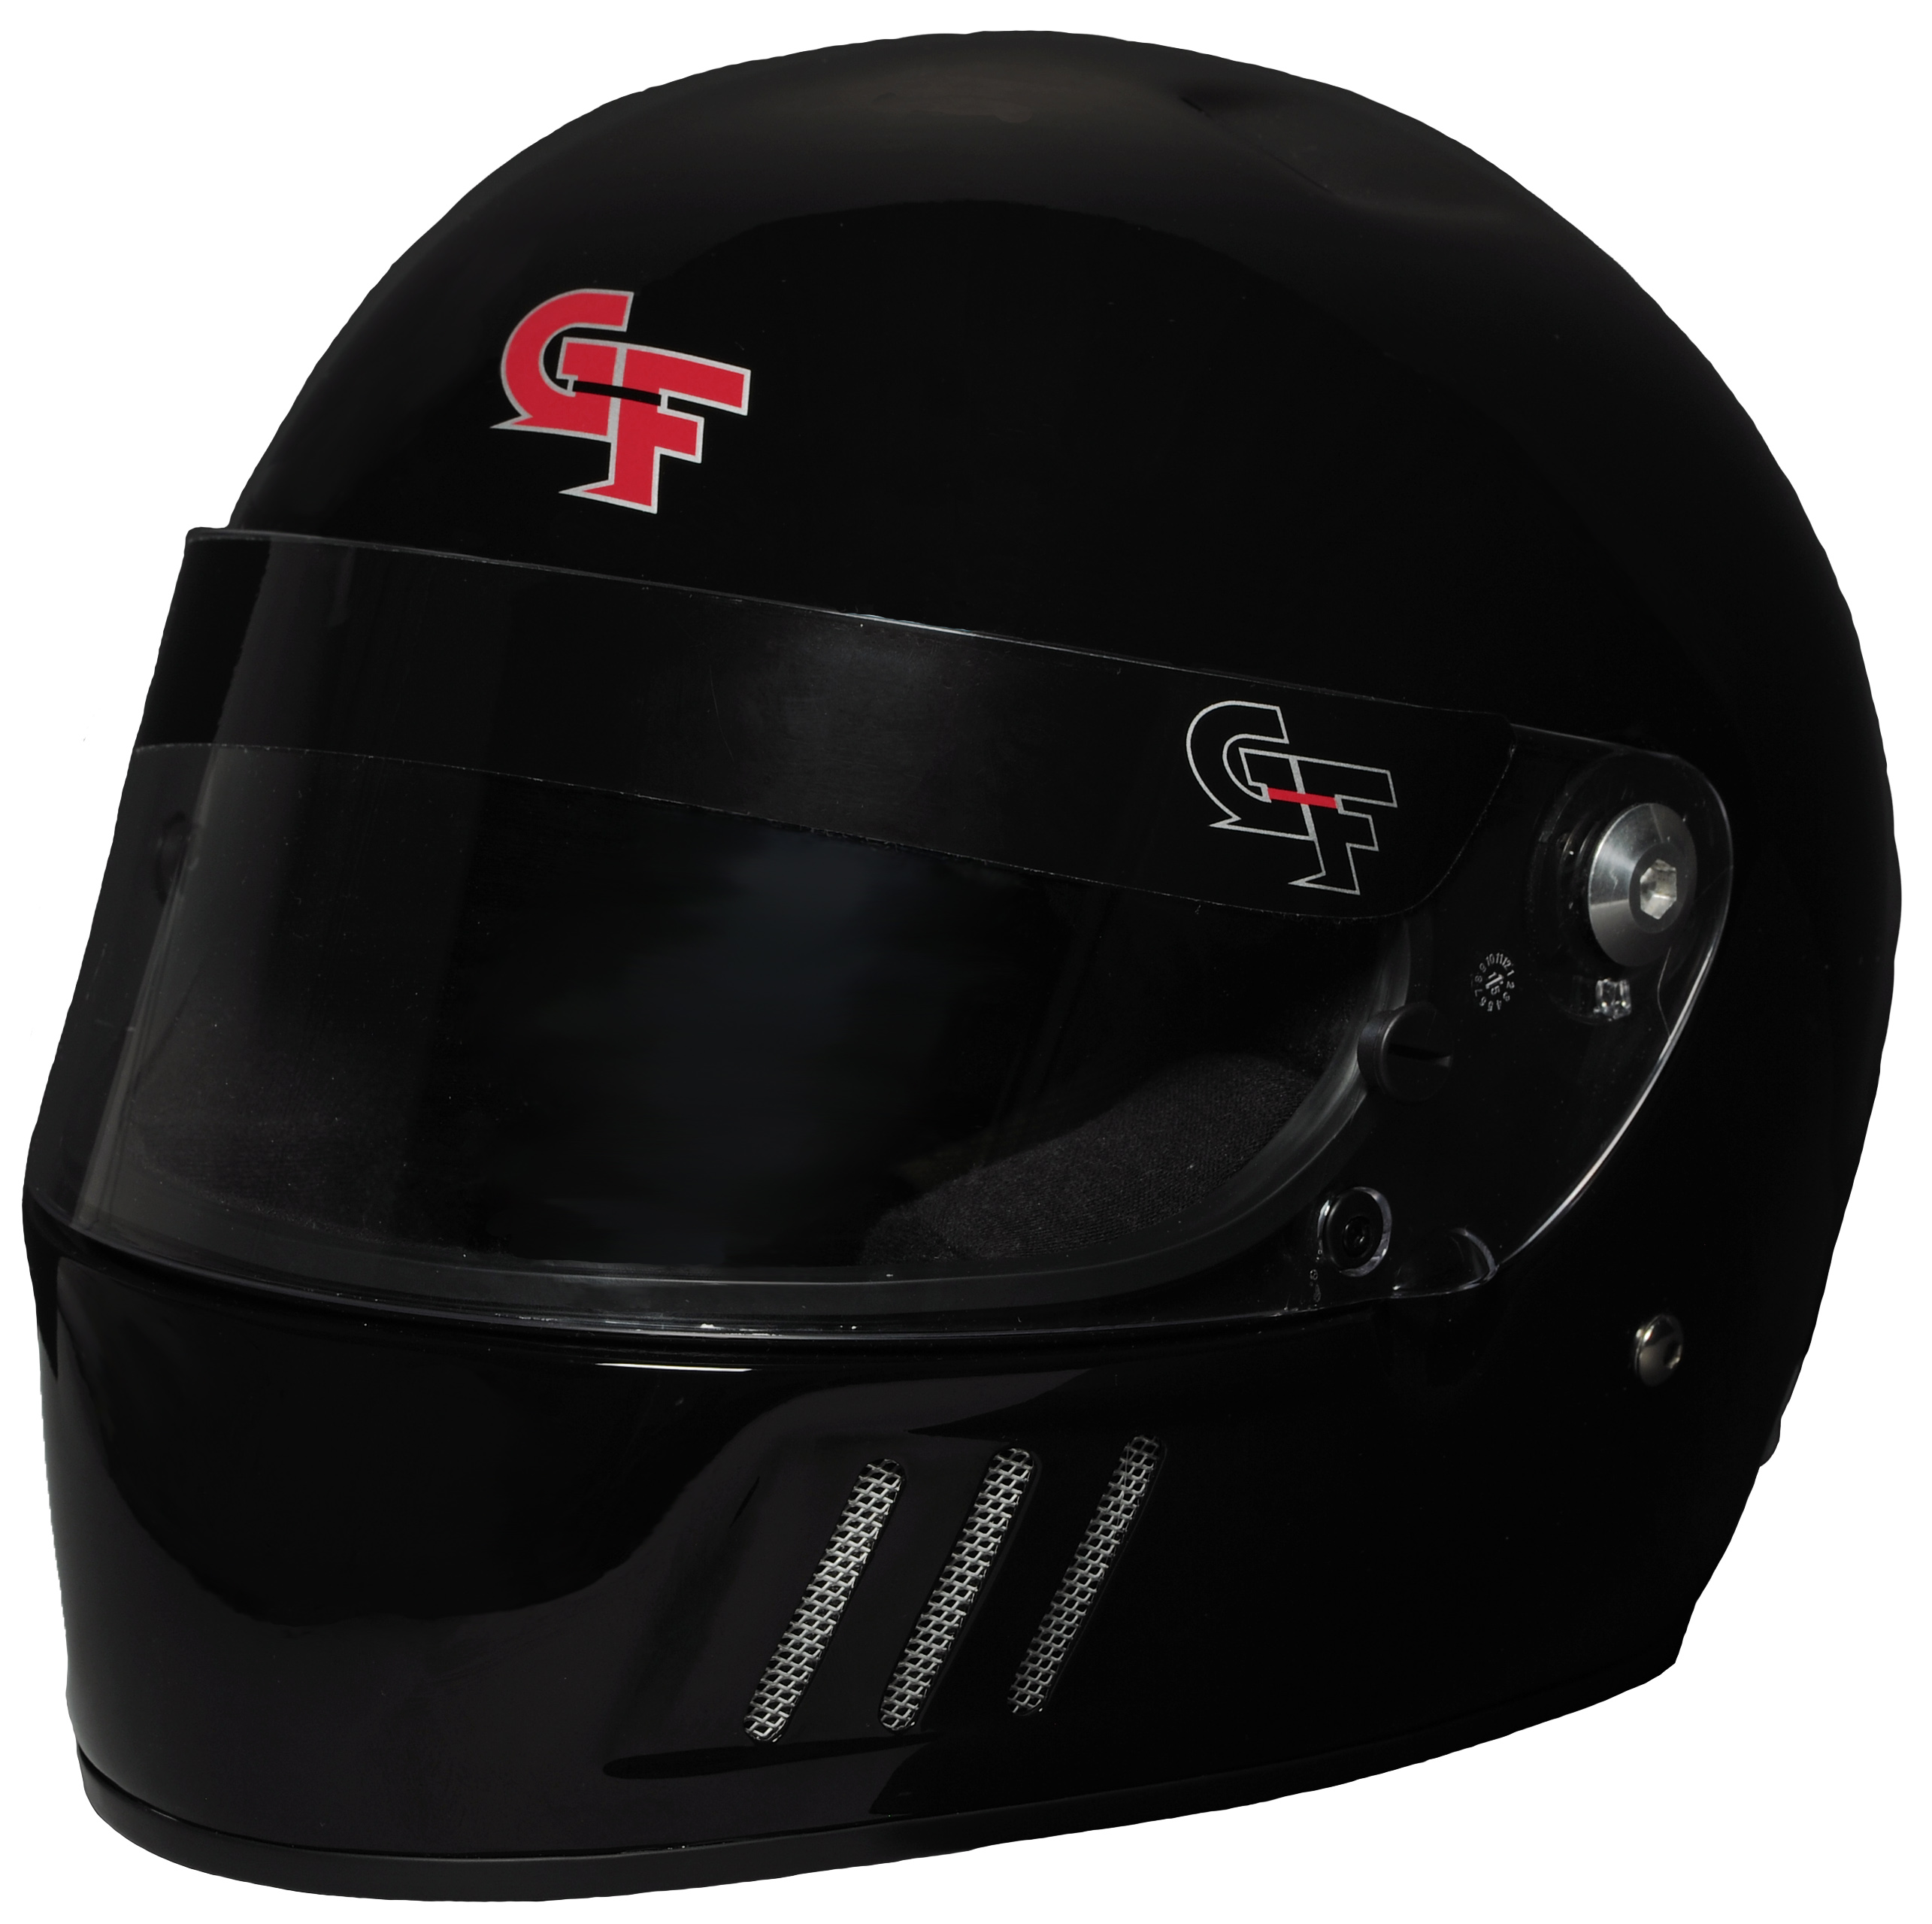 G-Force Racing Gear Helmet, GF3 FULL FACE XLG BLACK SA2015